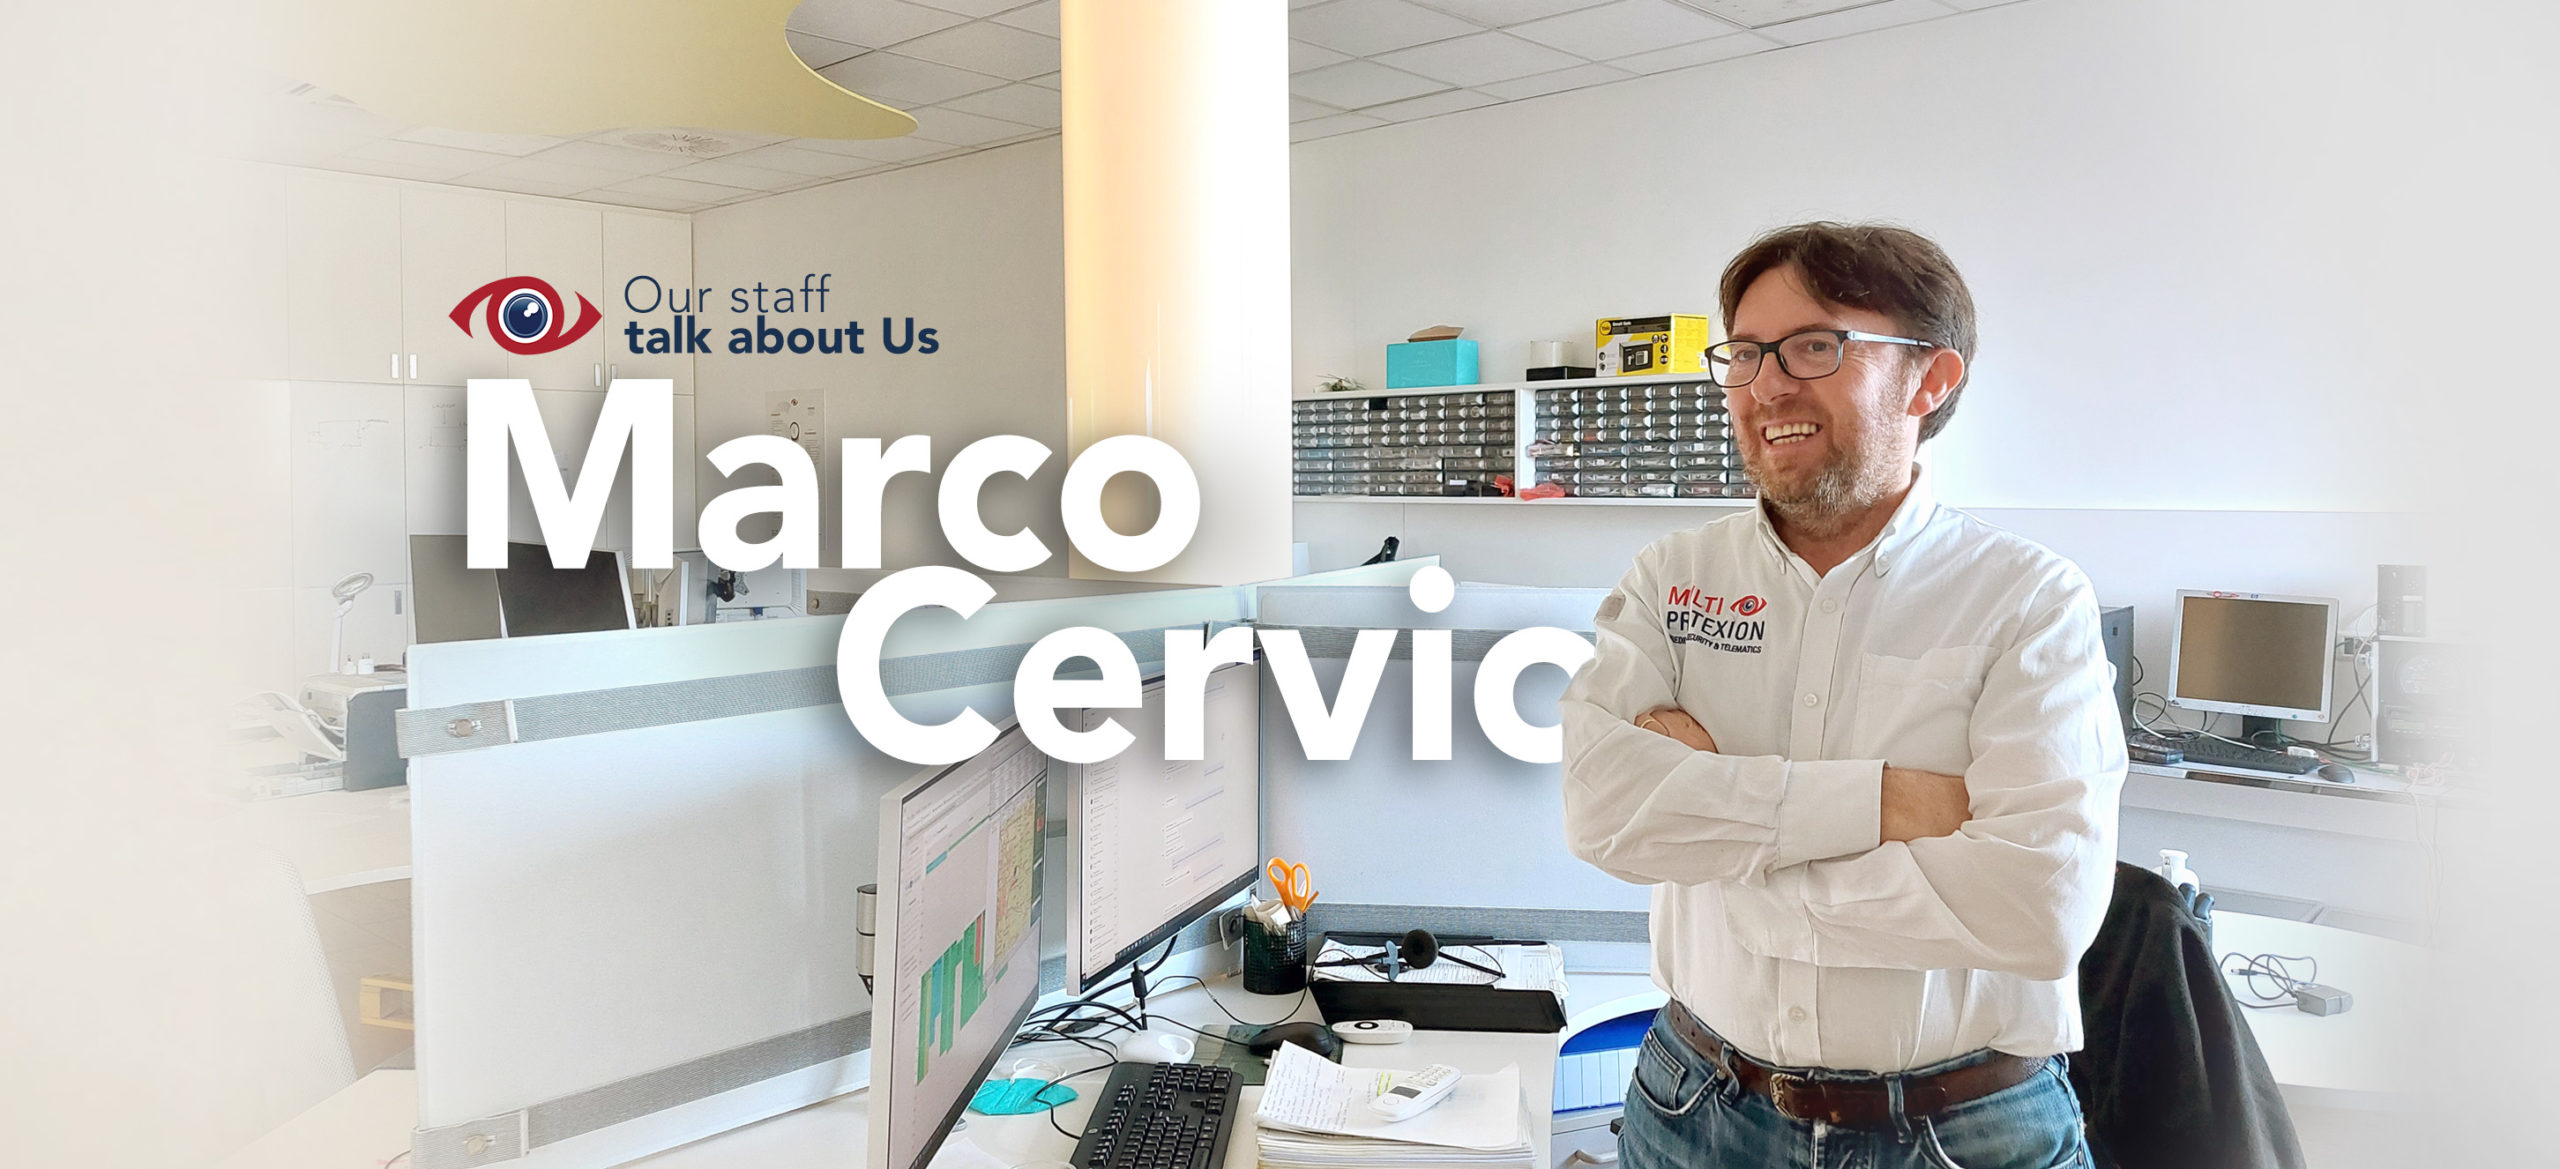 OUR STAFF TALK ABOUT US: L’INTERVISTA A MARCO CERVIO